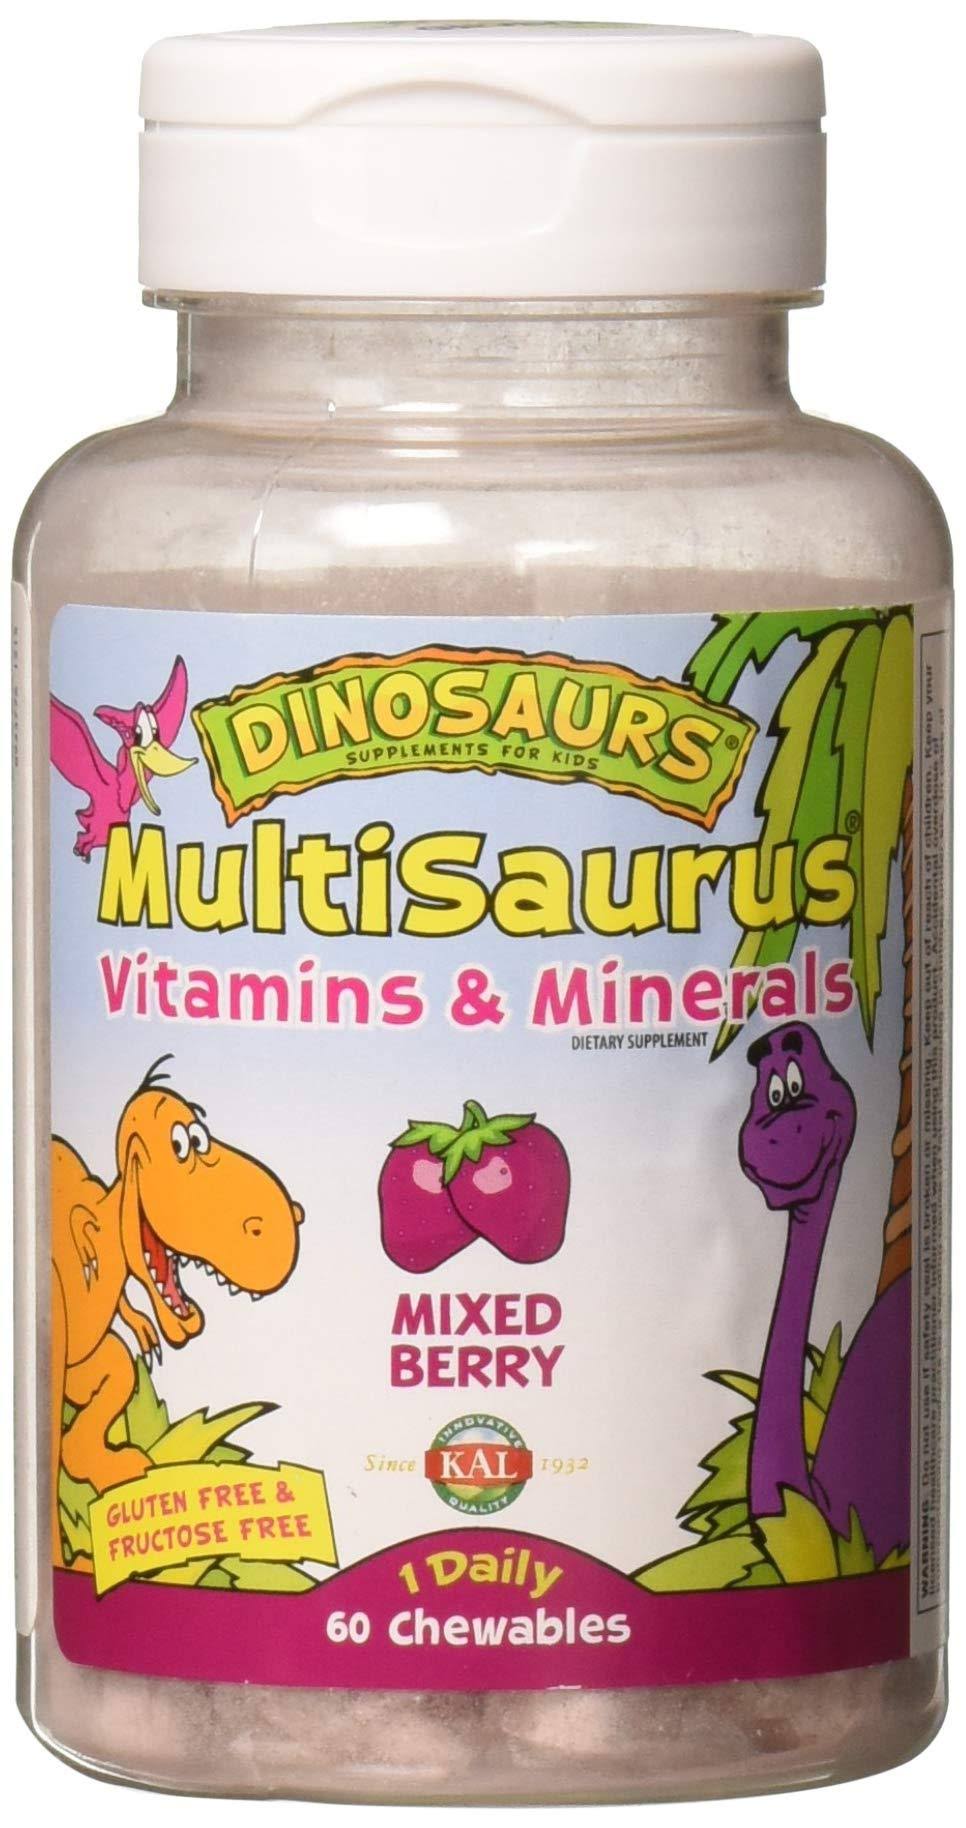 Kal Multi Saurus Vitamins and Minerals - Mixed Berry, 60ct